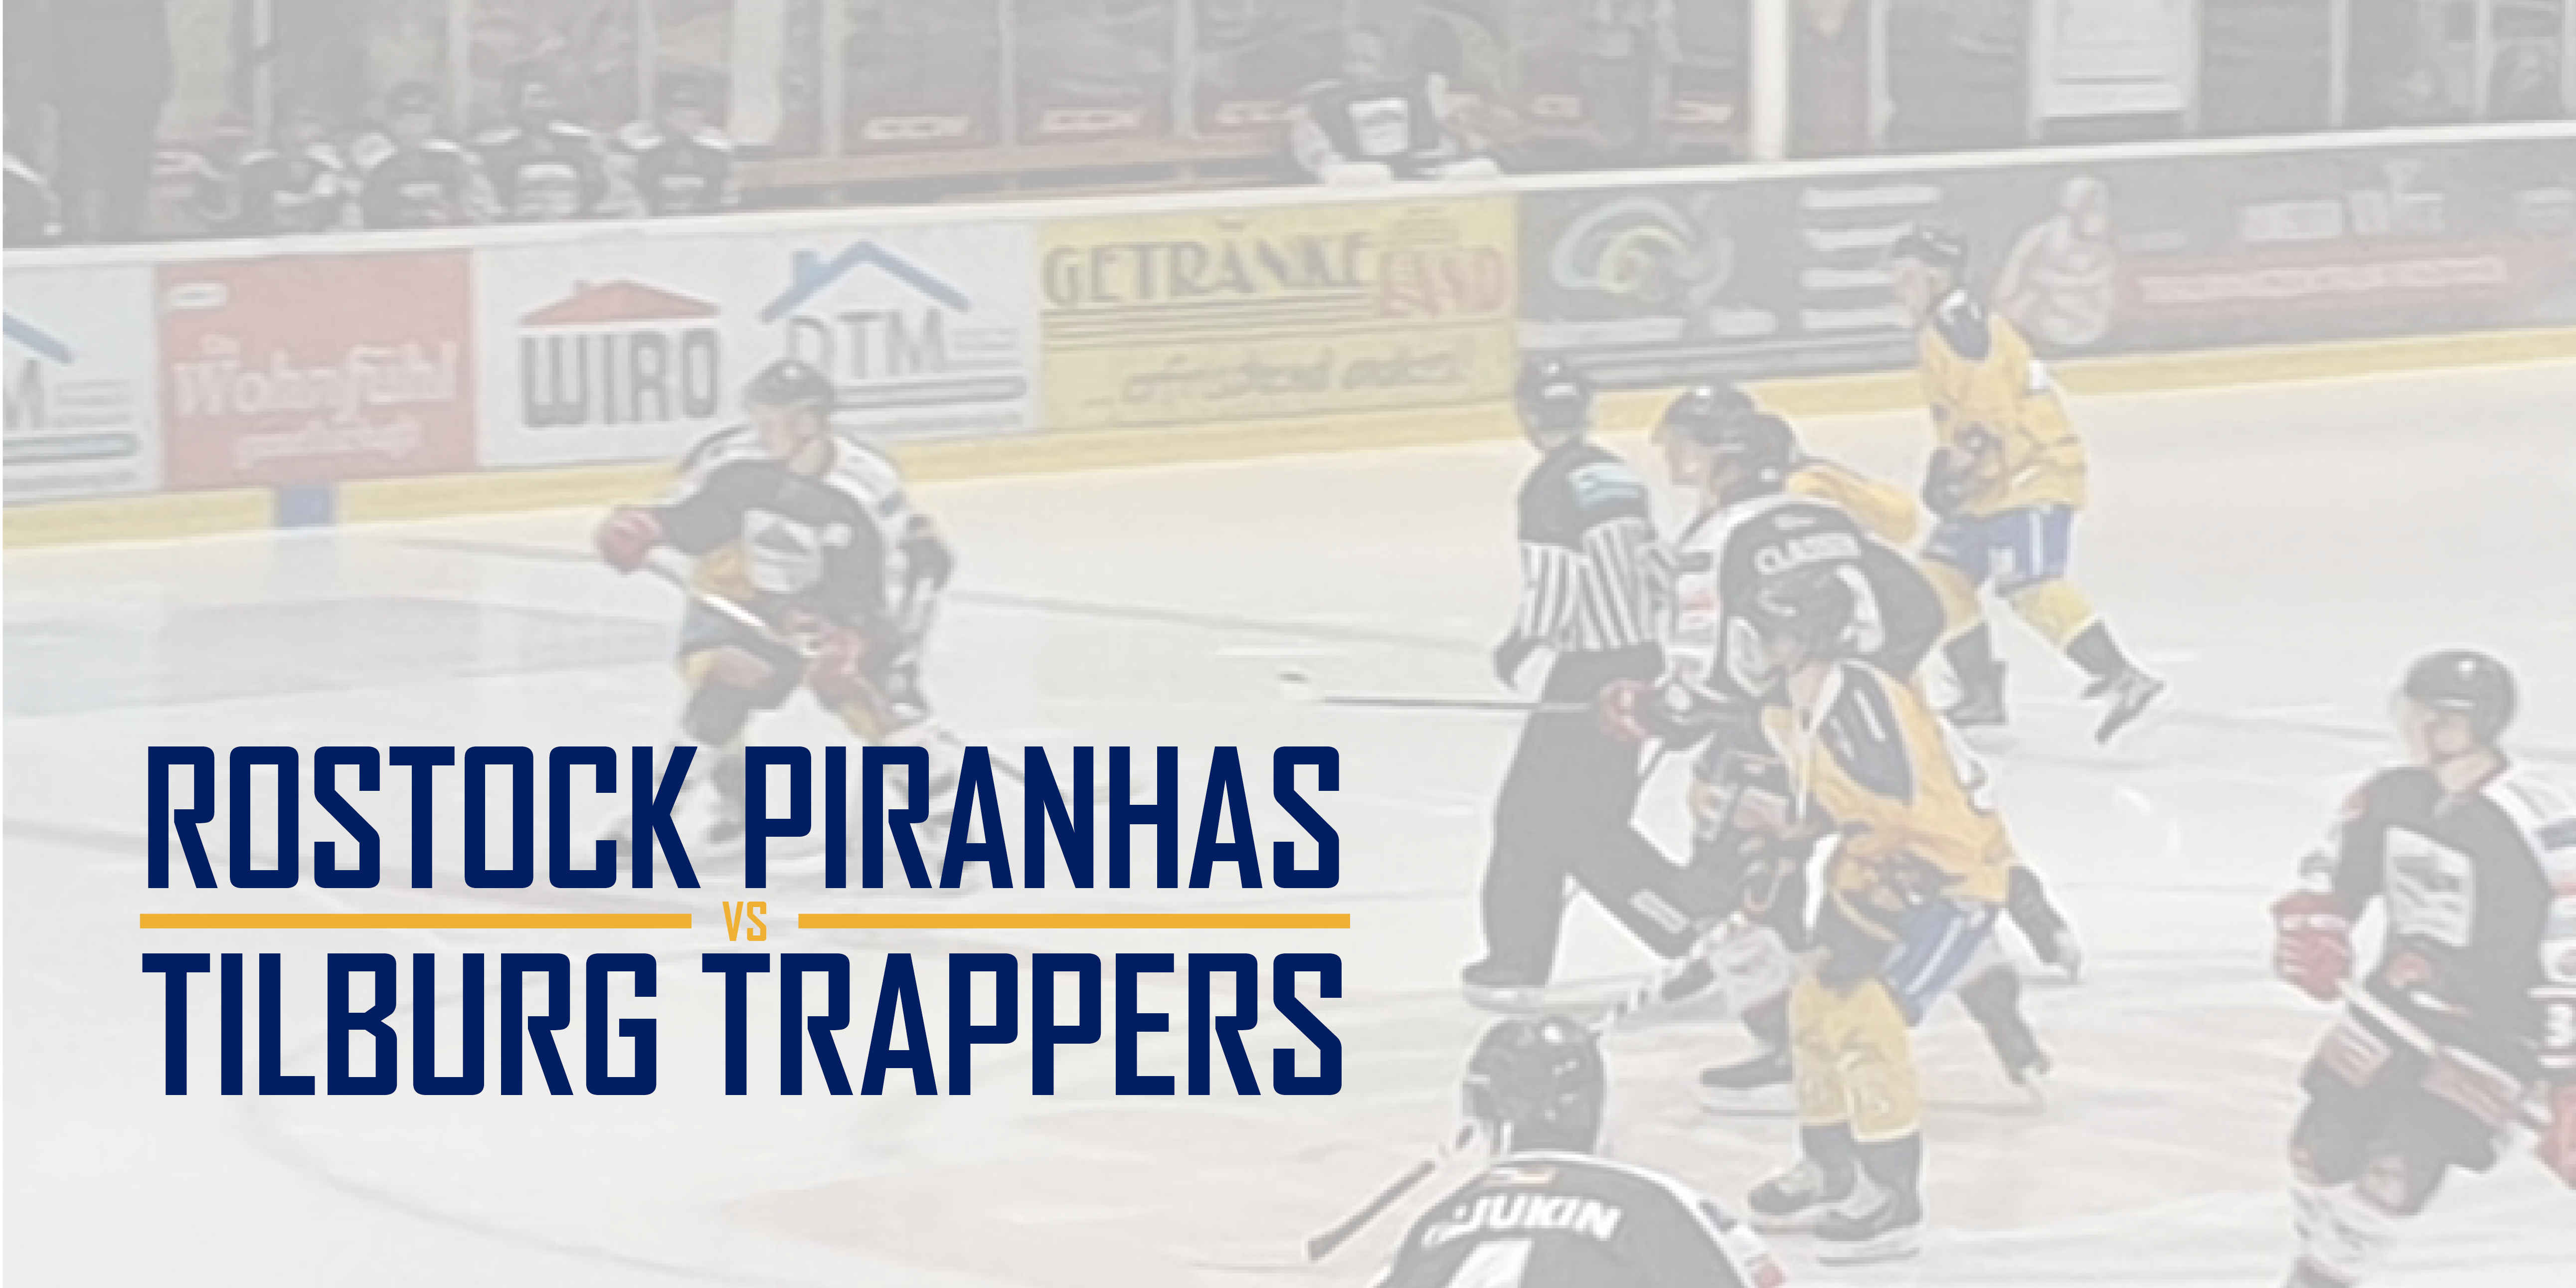 Rostock Piranhas vs. Tilburg Trappers (2-5)